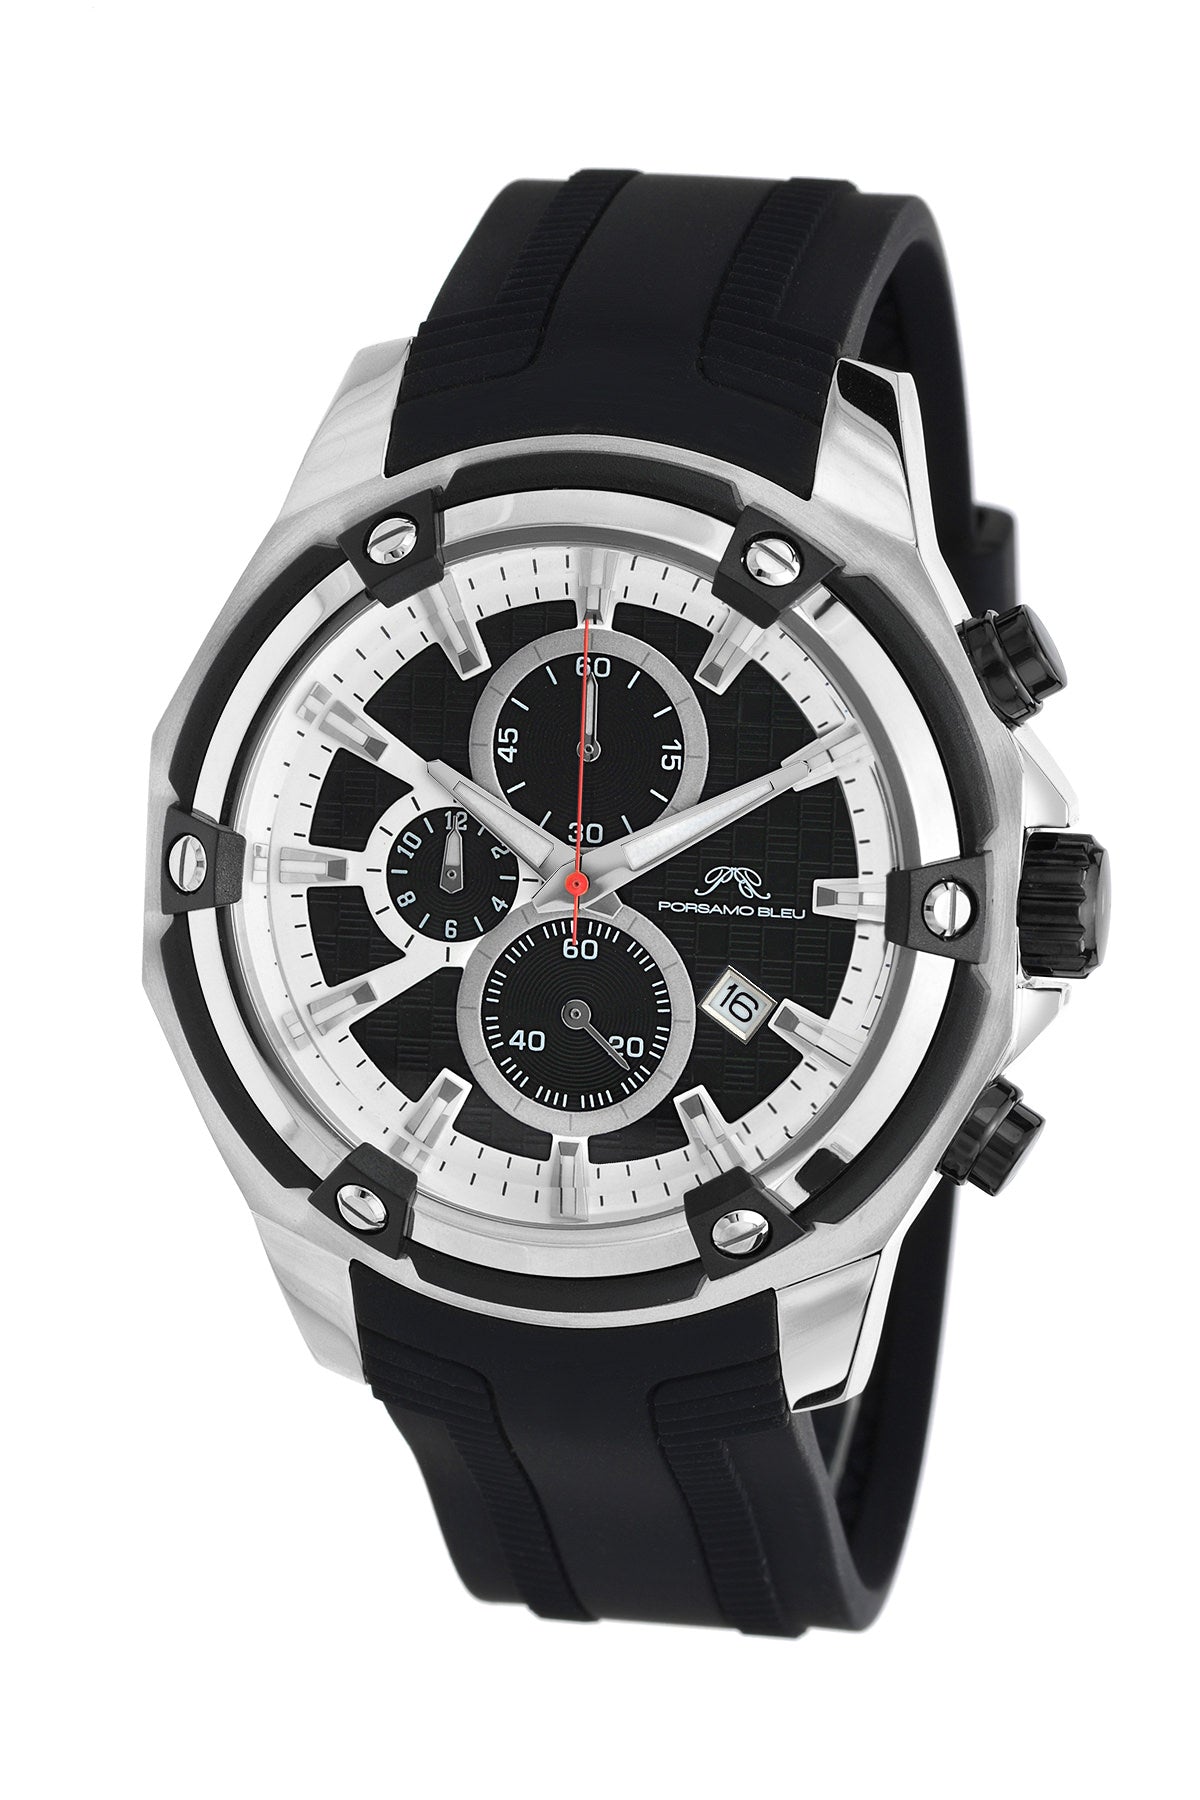 Porsamo Bleu Stavros luxury chronograph men's watch, silicone strap, silver, black 482BSTR